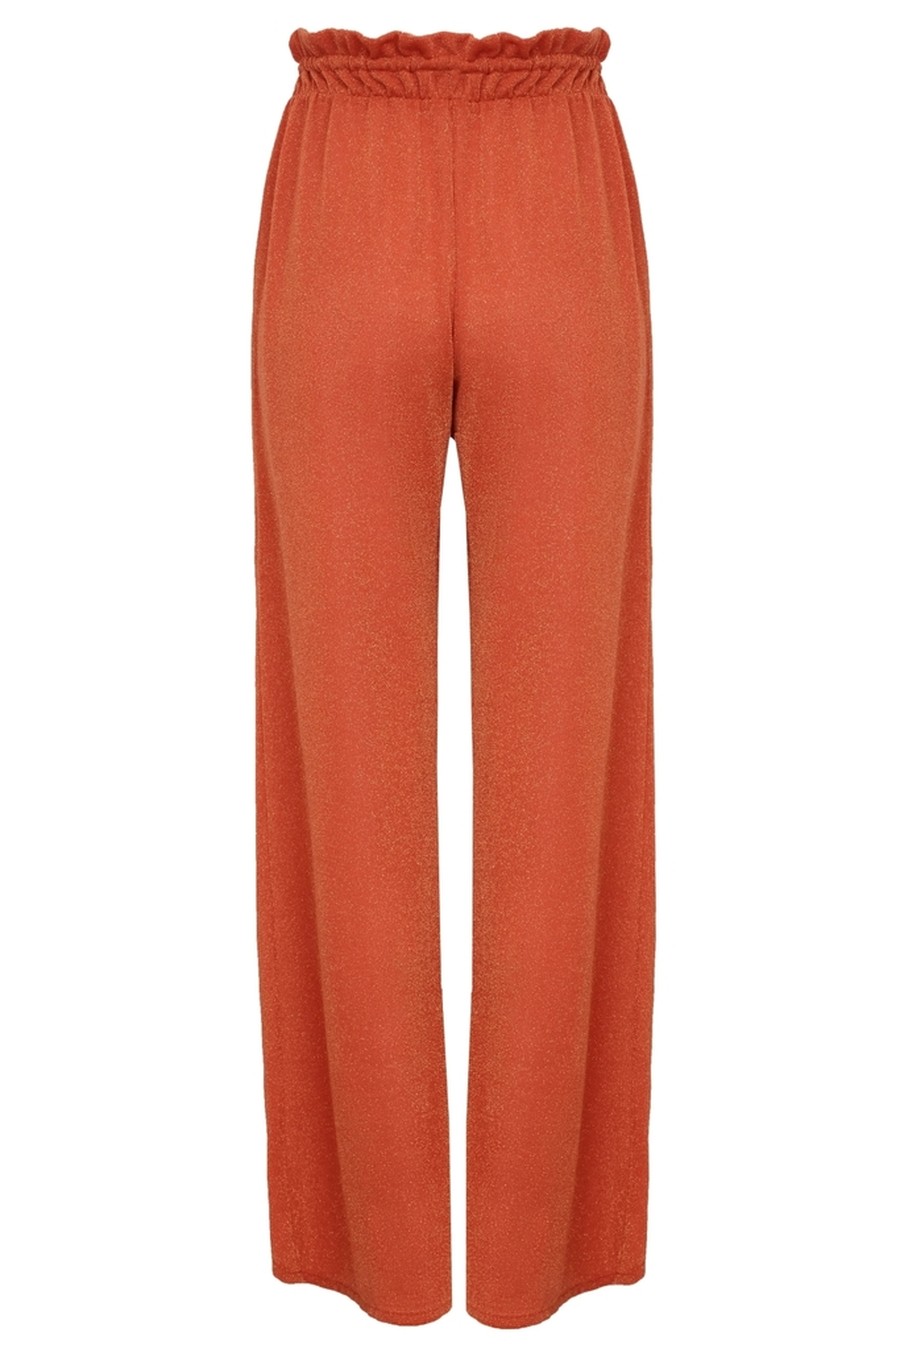 calça pantalona lurex orange SB44 ripple bb